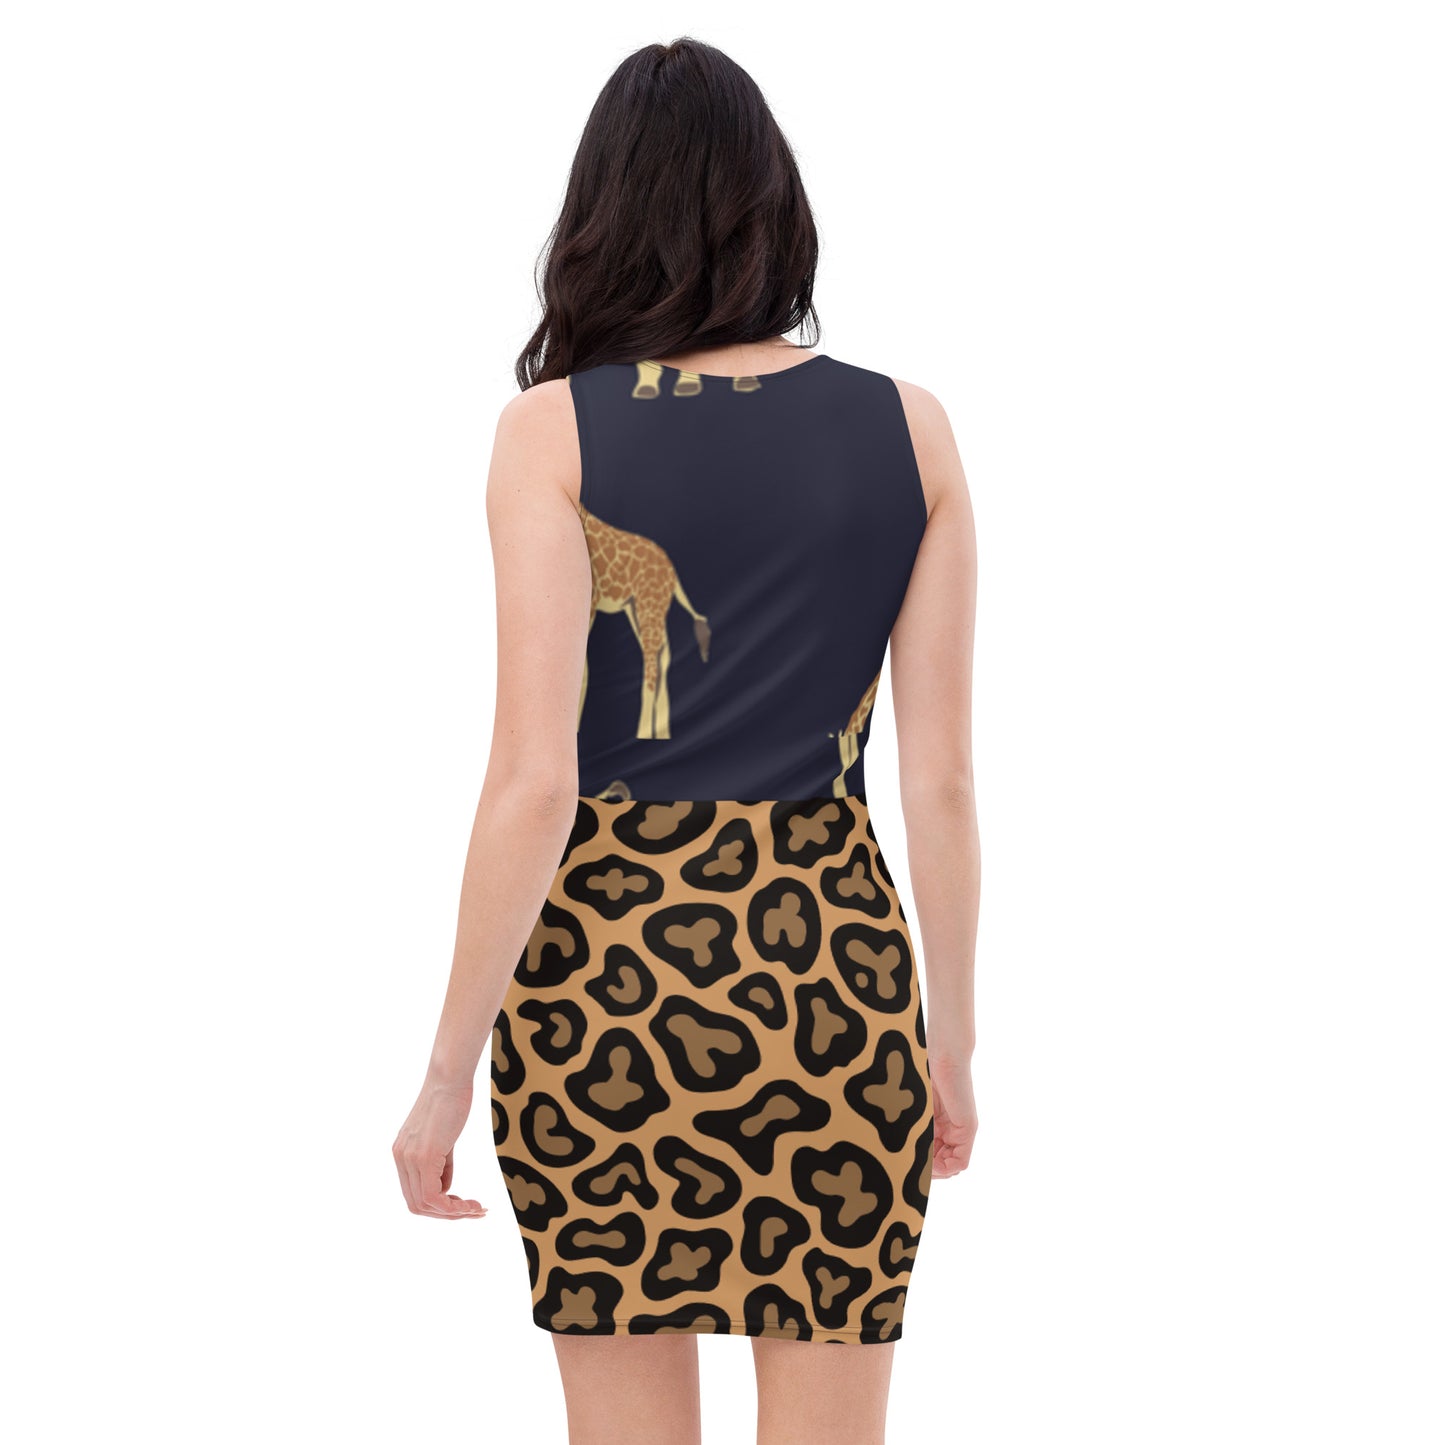 Cheetah Dress- With Giraff Print Vest &Belt(with Buckle)